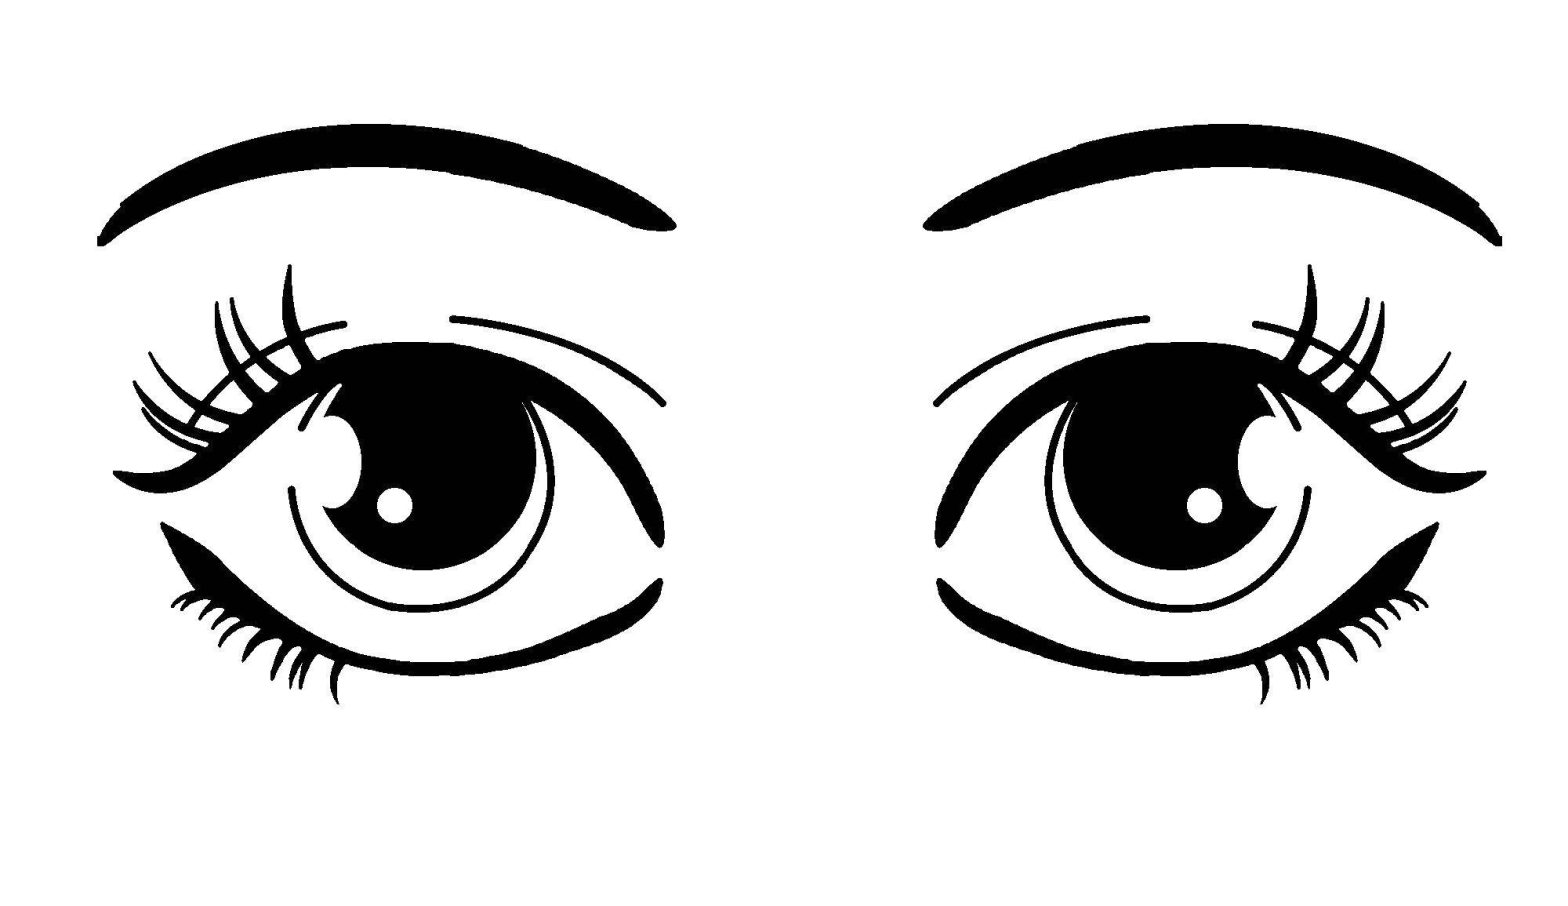 Раскраска контур глаза для детей (контур, глаза)